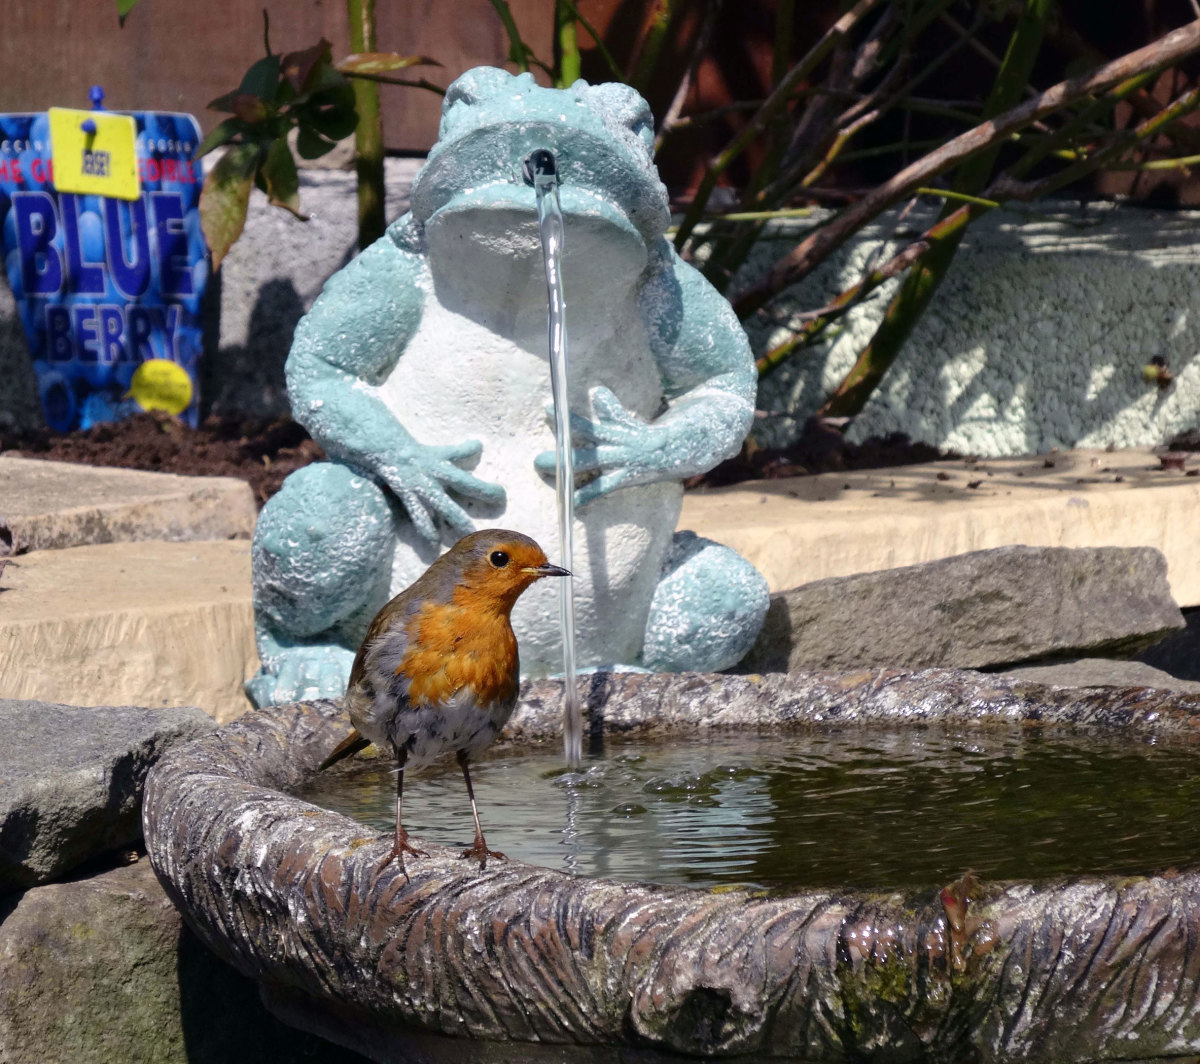 Robin in birdbath set in wildlife pond with frog spouting water.  